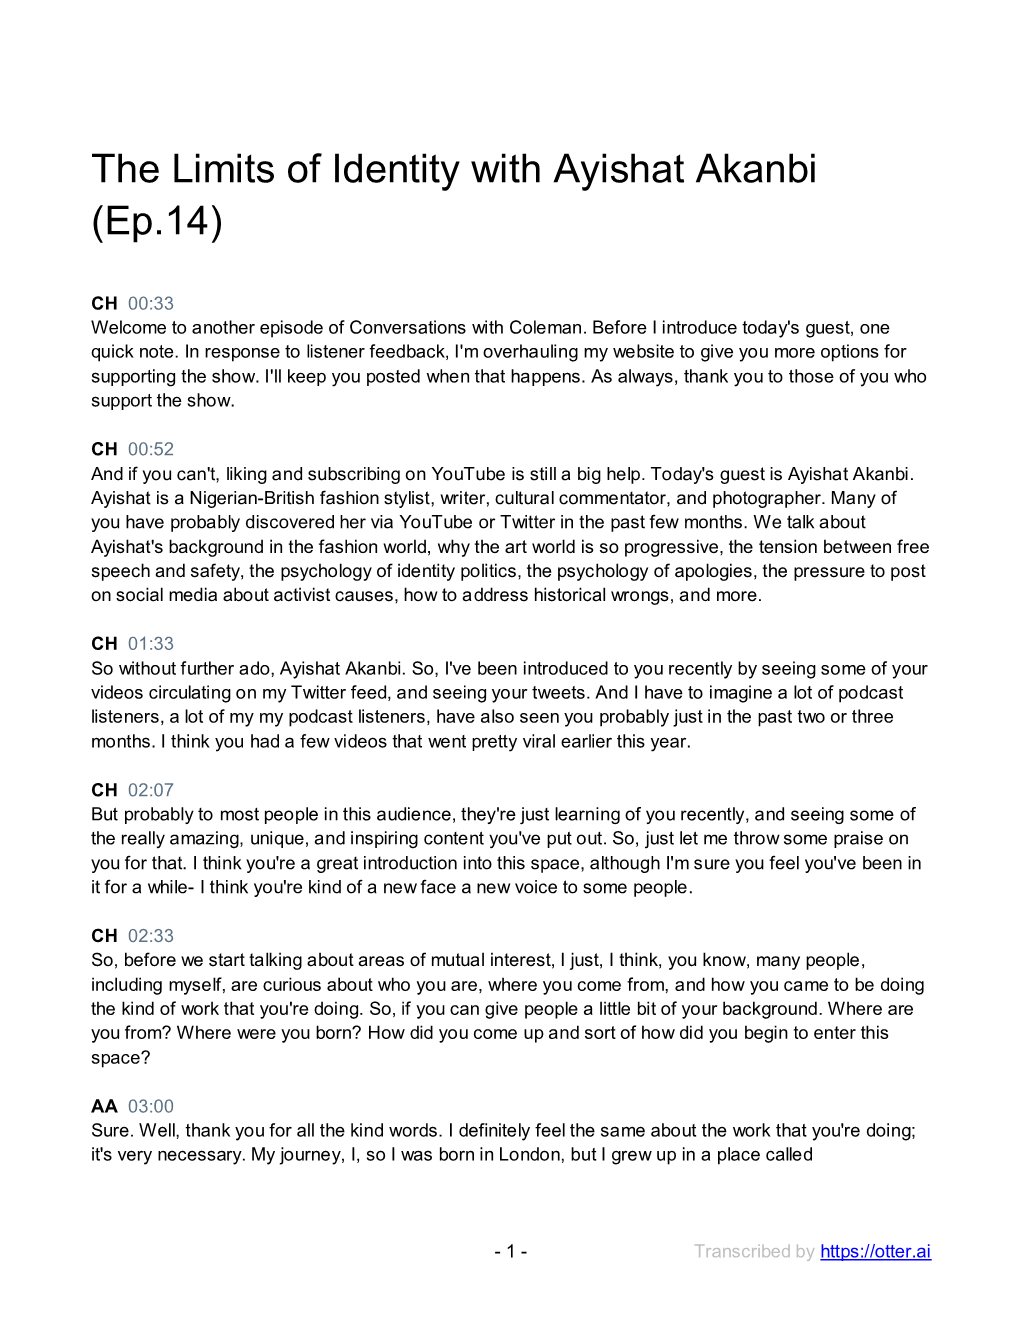 The Limits of Identity with Ayishat Akanbi (Ep.14)